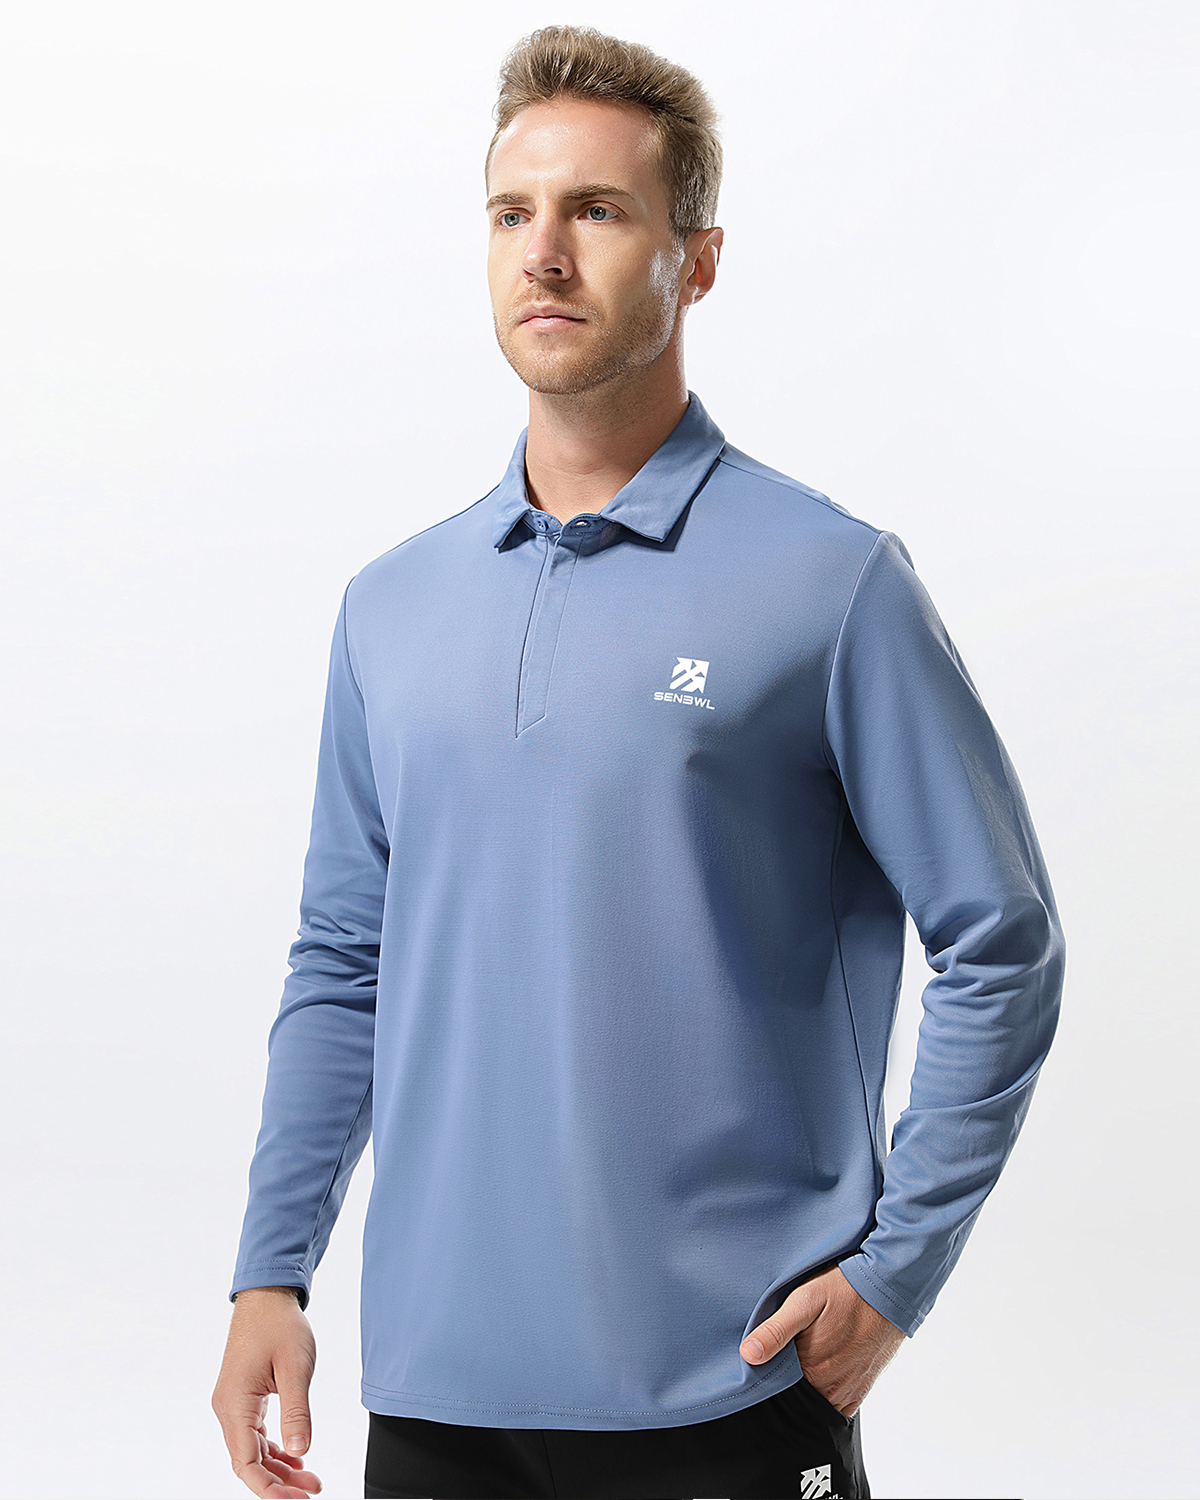 Senbwl Men's Quick Drying Long Sleeve Polo Shirts -Senbwl Sports